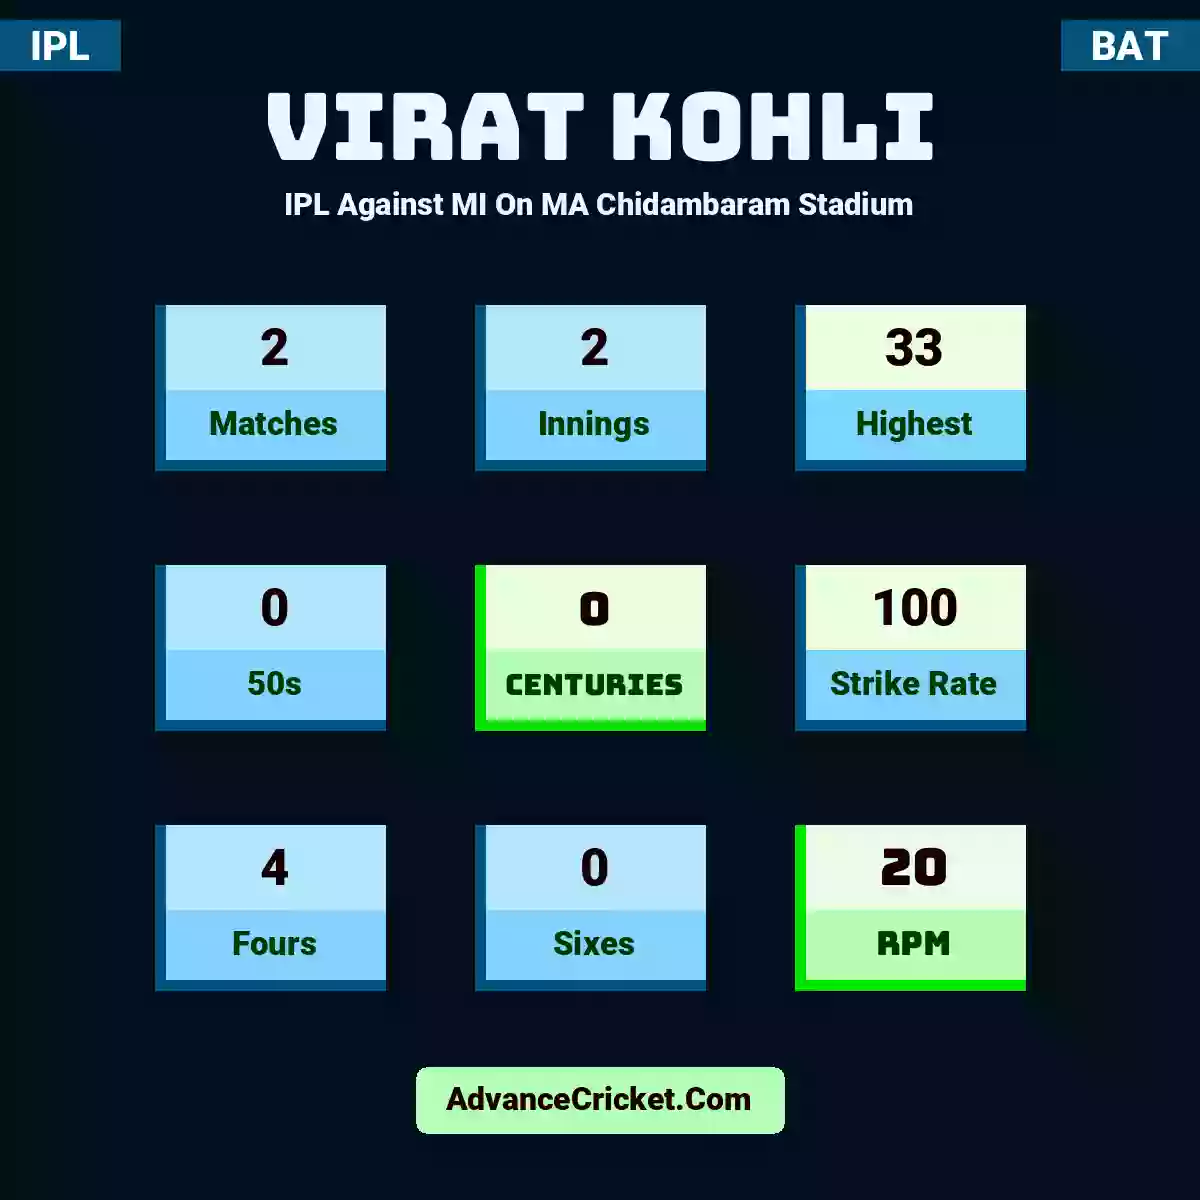 Virat Kohli IPL  Against MI On MA Chidambaram Stadium, Virat Kohli played 2 matches, scored 33 runs as highest, 0 half-centuries, and 0 centuries, with a strike rate of 100. V.Kohli hit 4 fours and 0 sixes, with an RPM of 20.